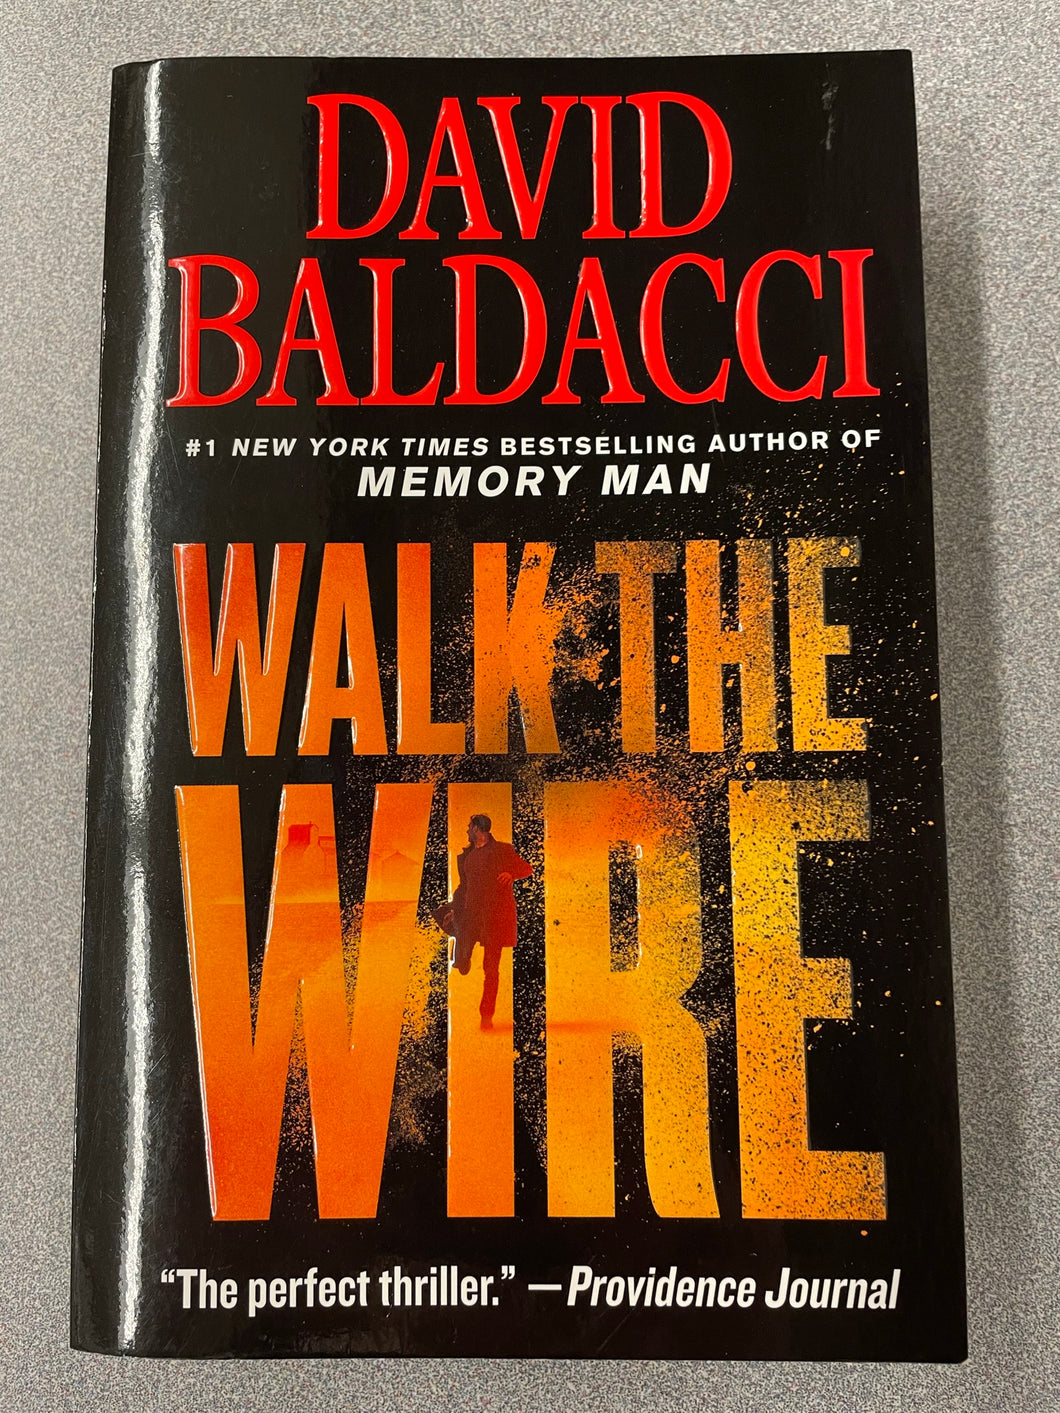 Baldacci, David, Walk the Wire [2020] MY 7/23